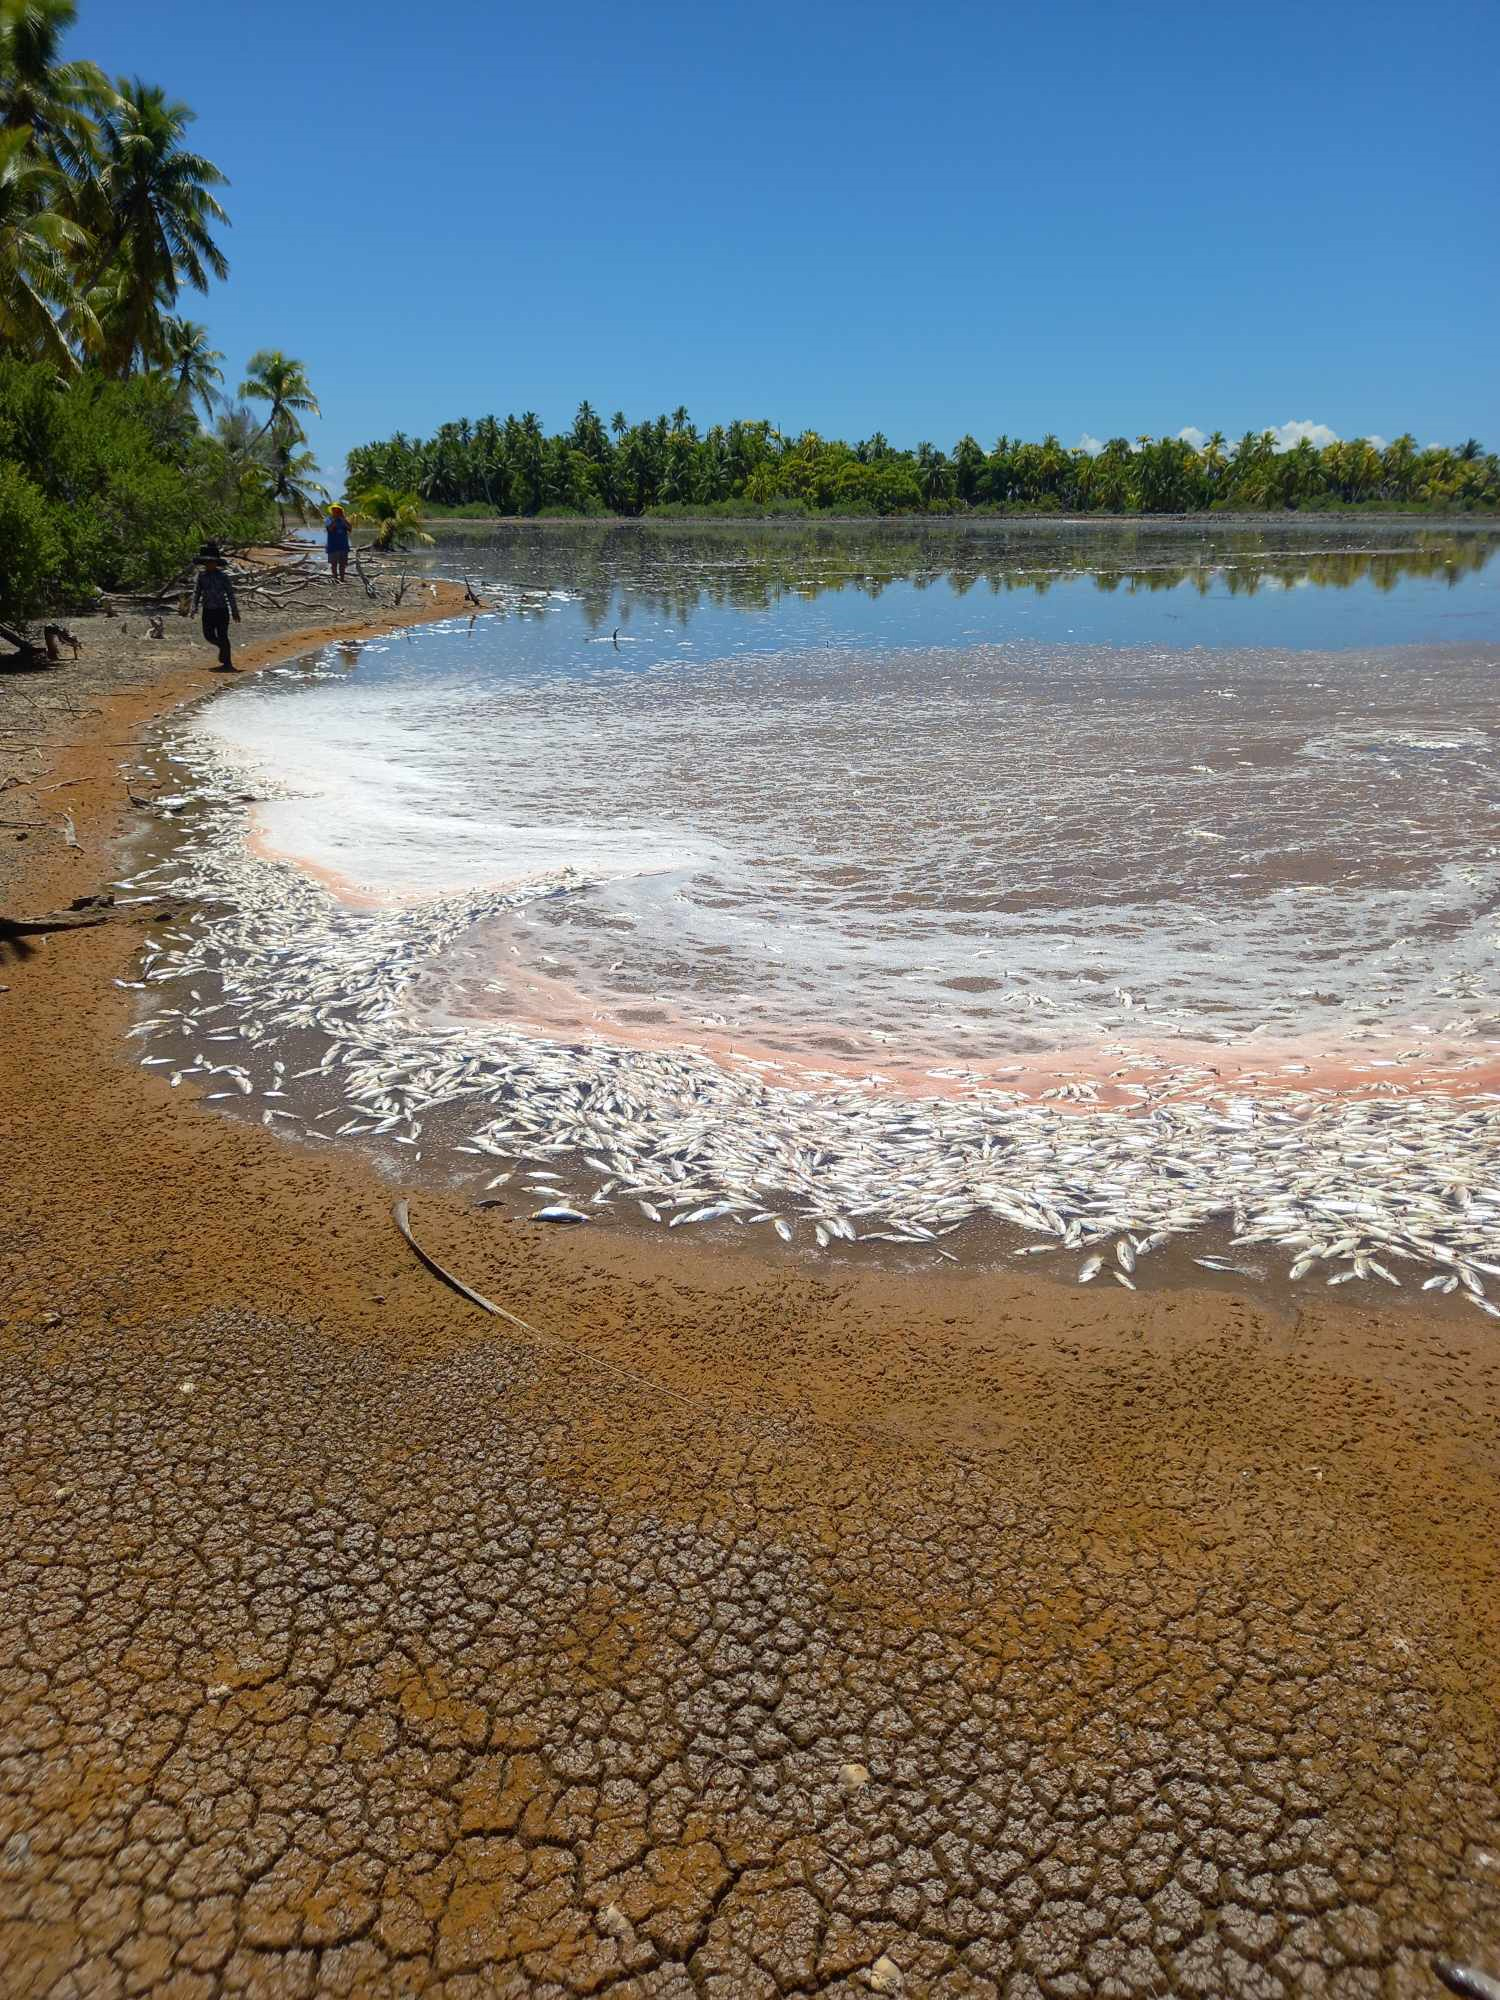 Marine biologist says El Nino may be behind Penrhyn Island fish kill